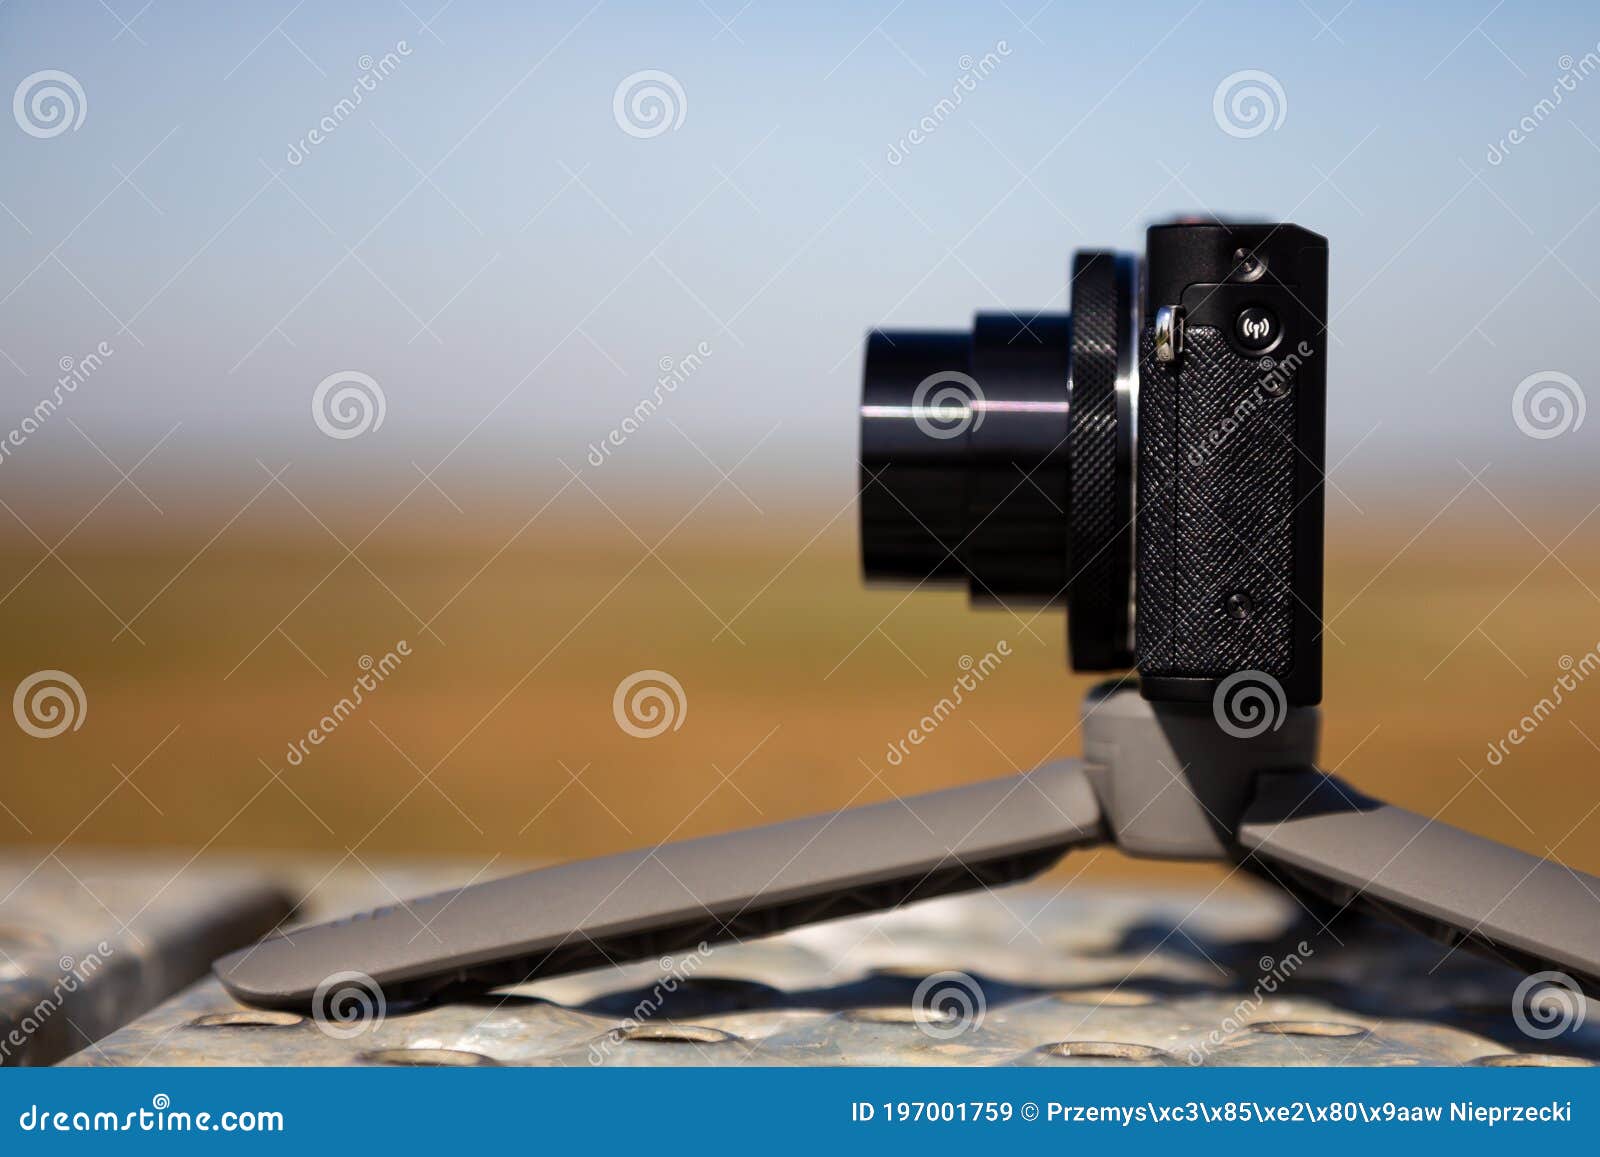 compact camera on small tripod